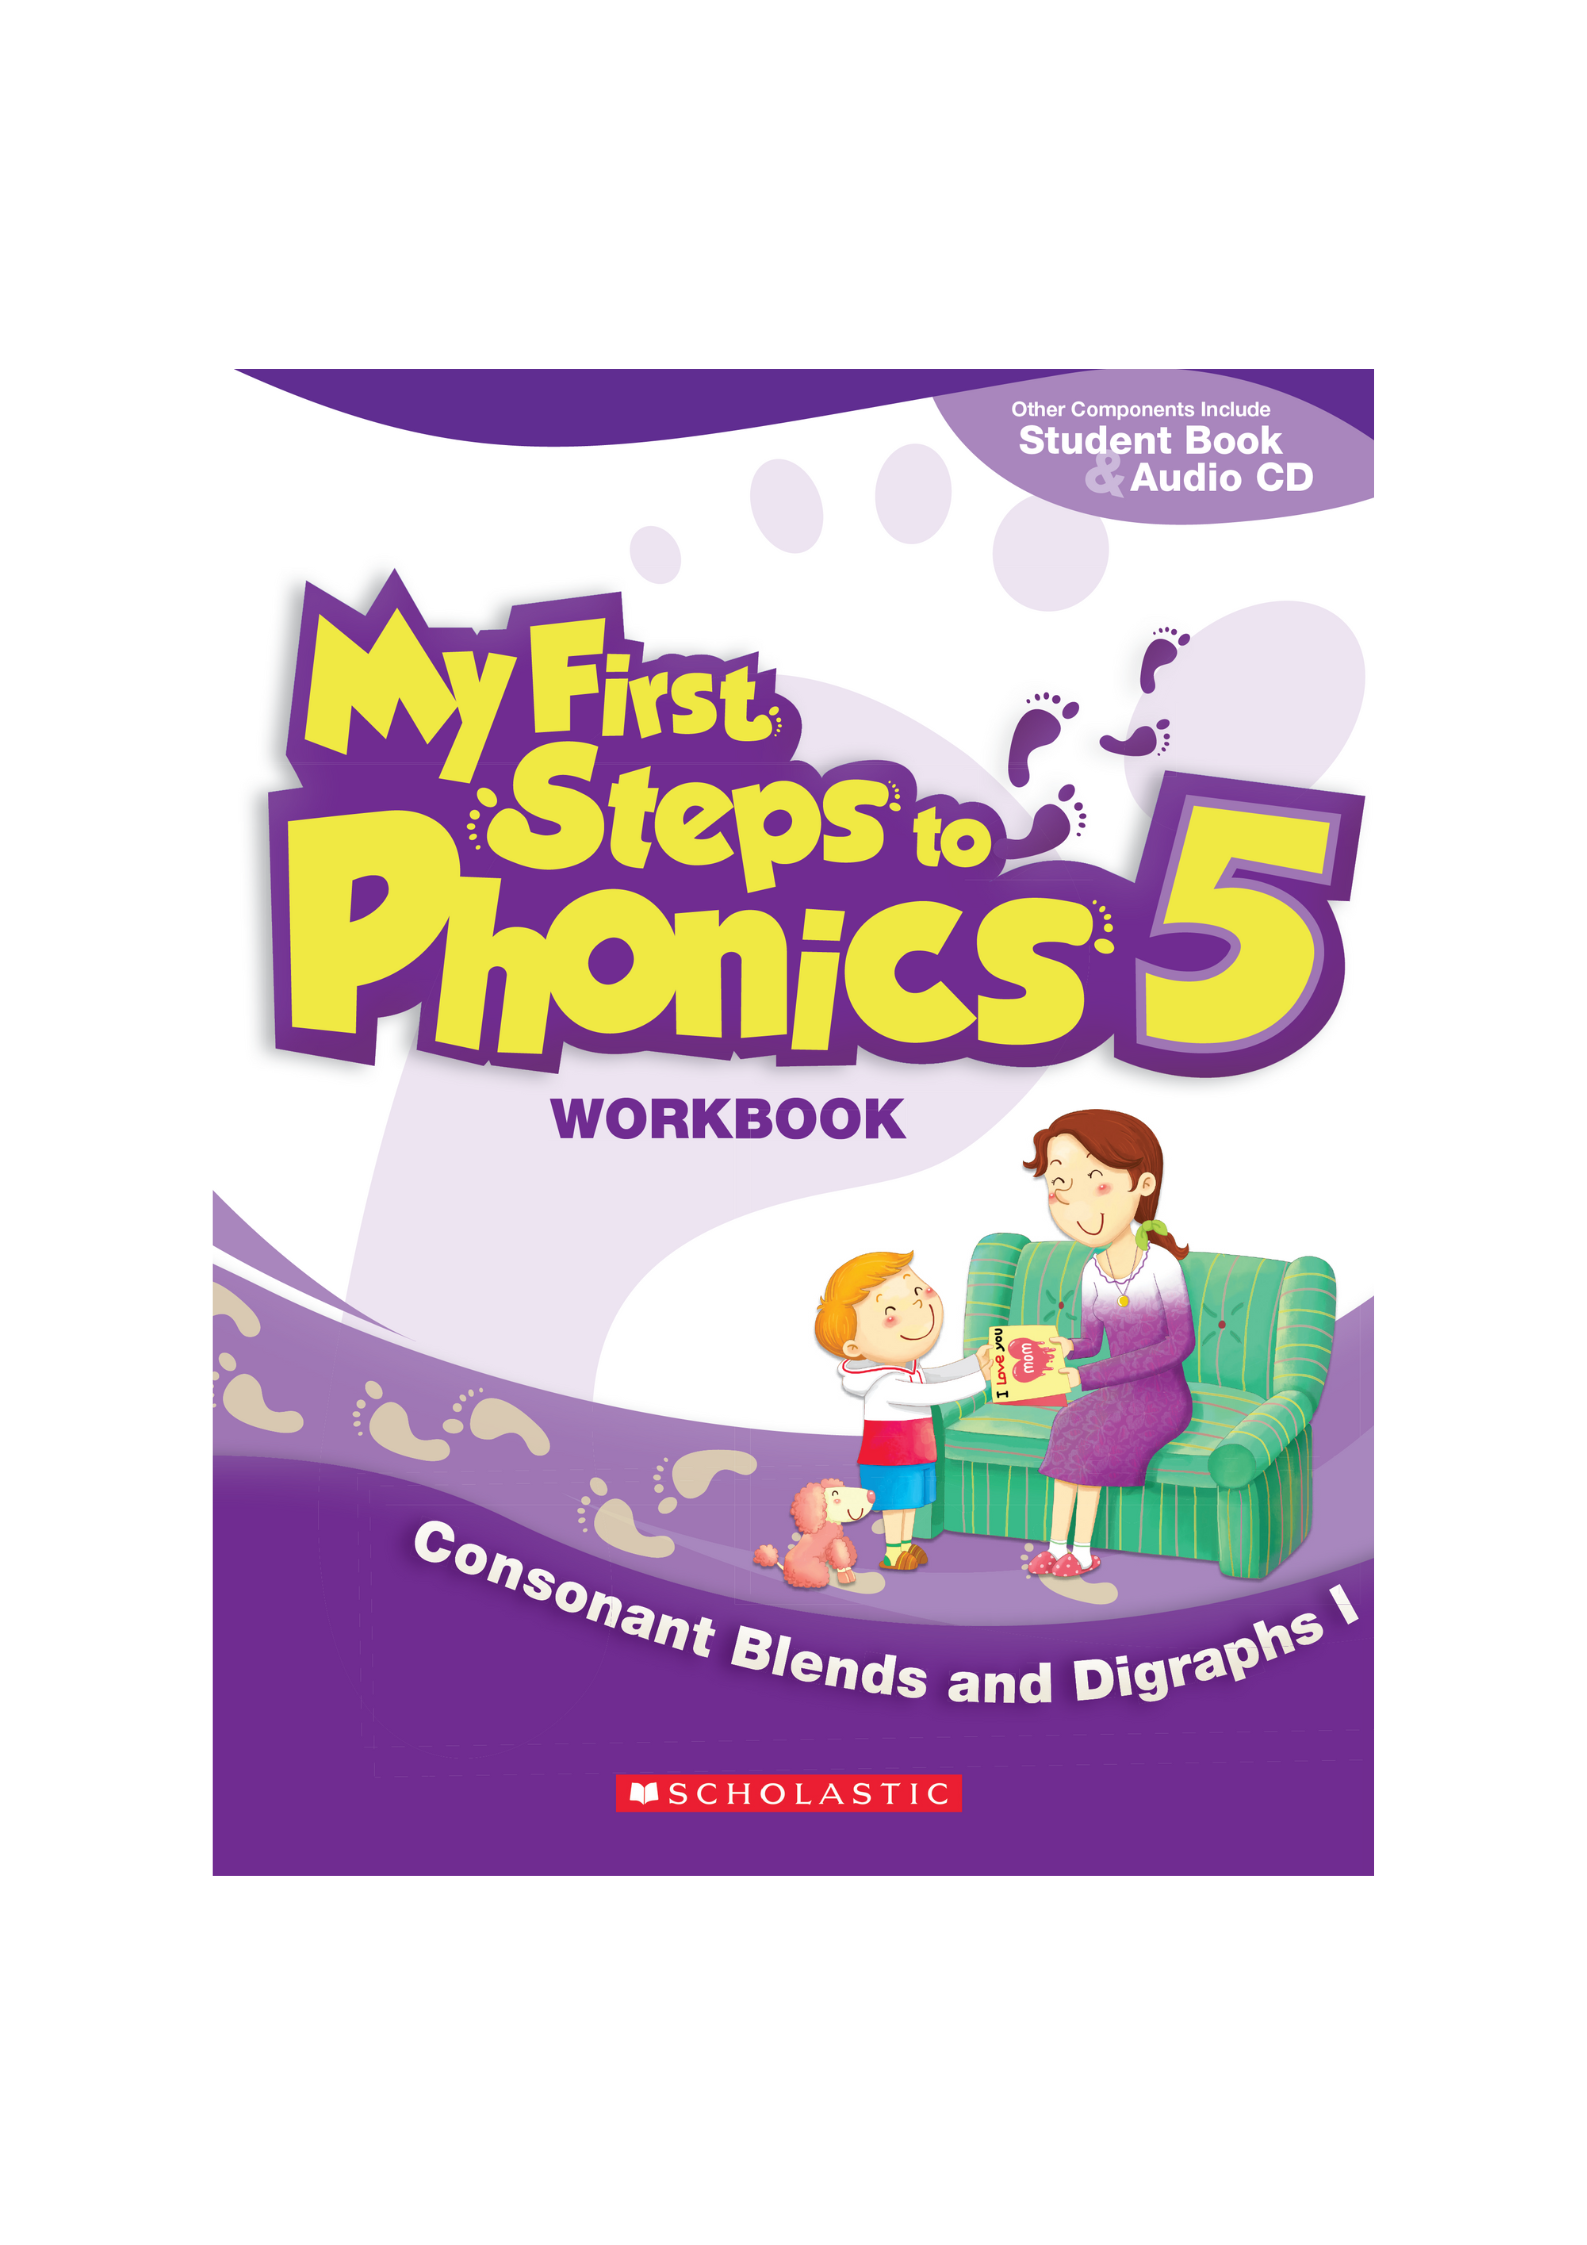 My First Step to Phonics 5: Workbook